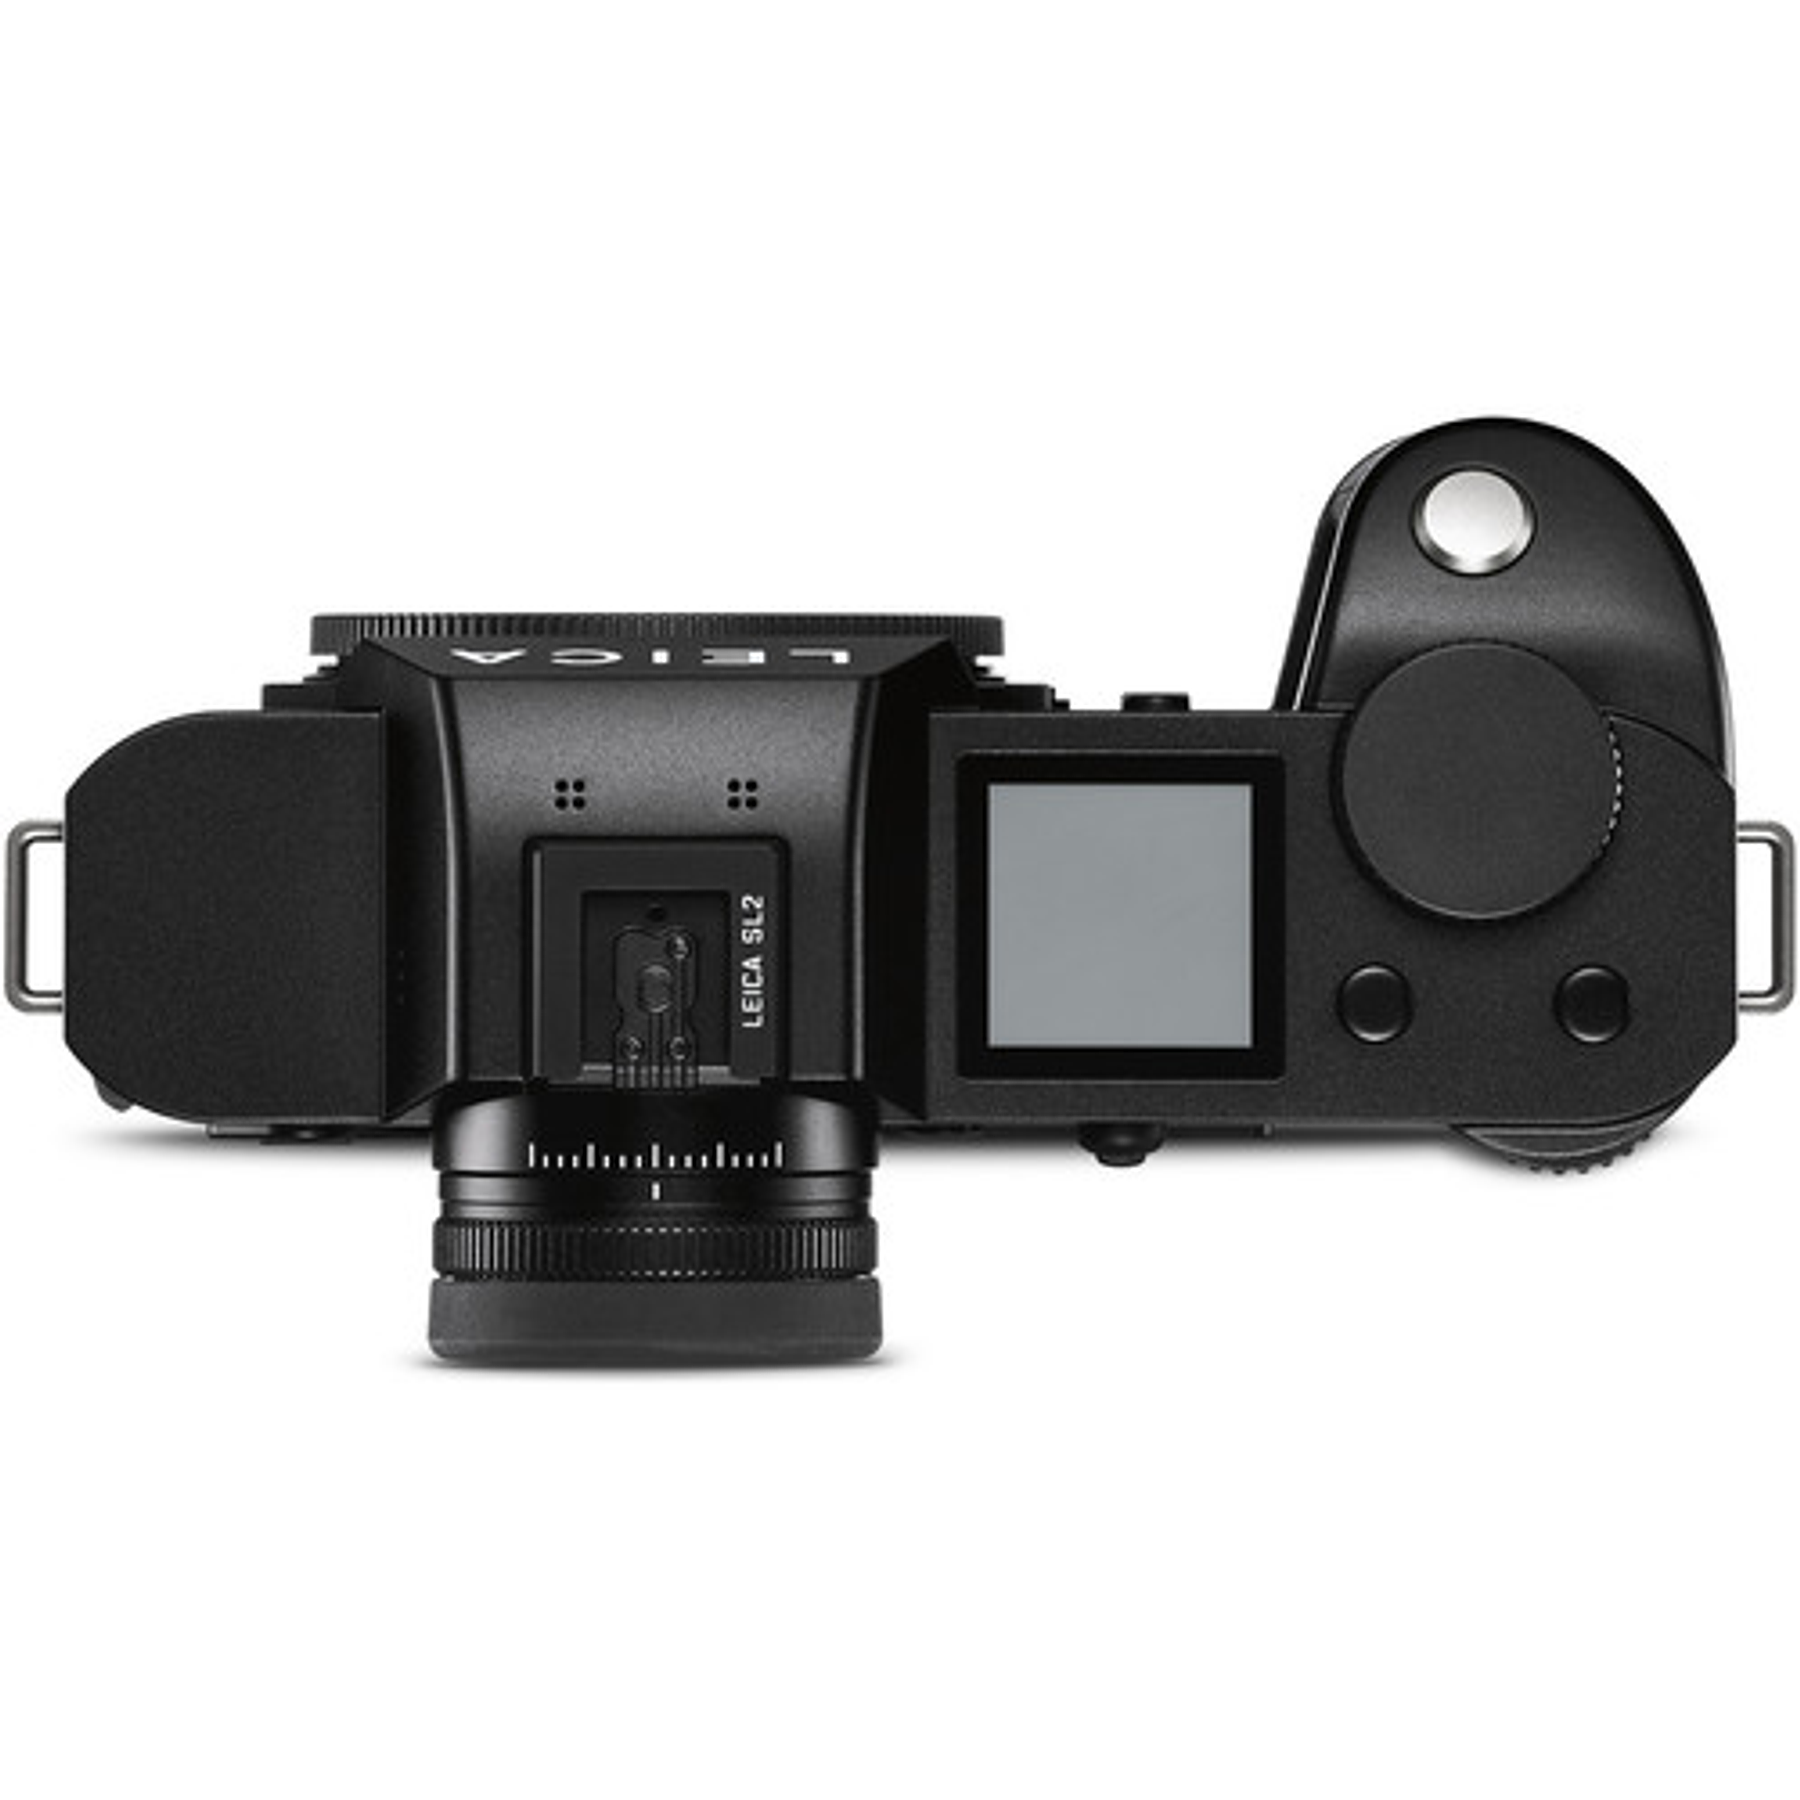 Cámara digital mirrorless Leica SL2